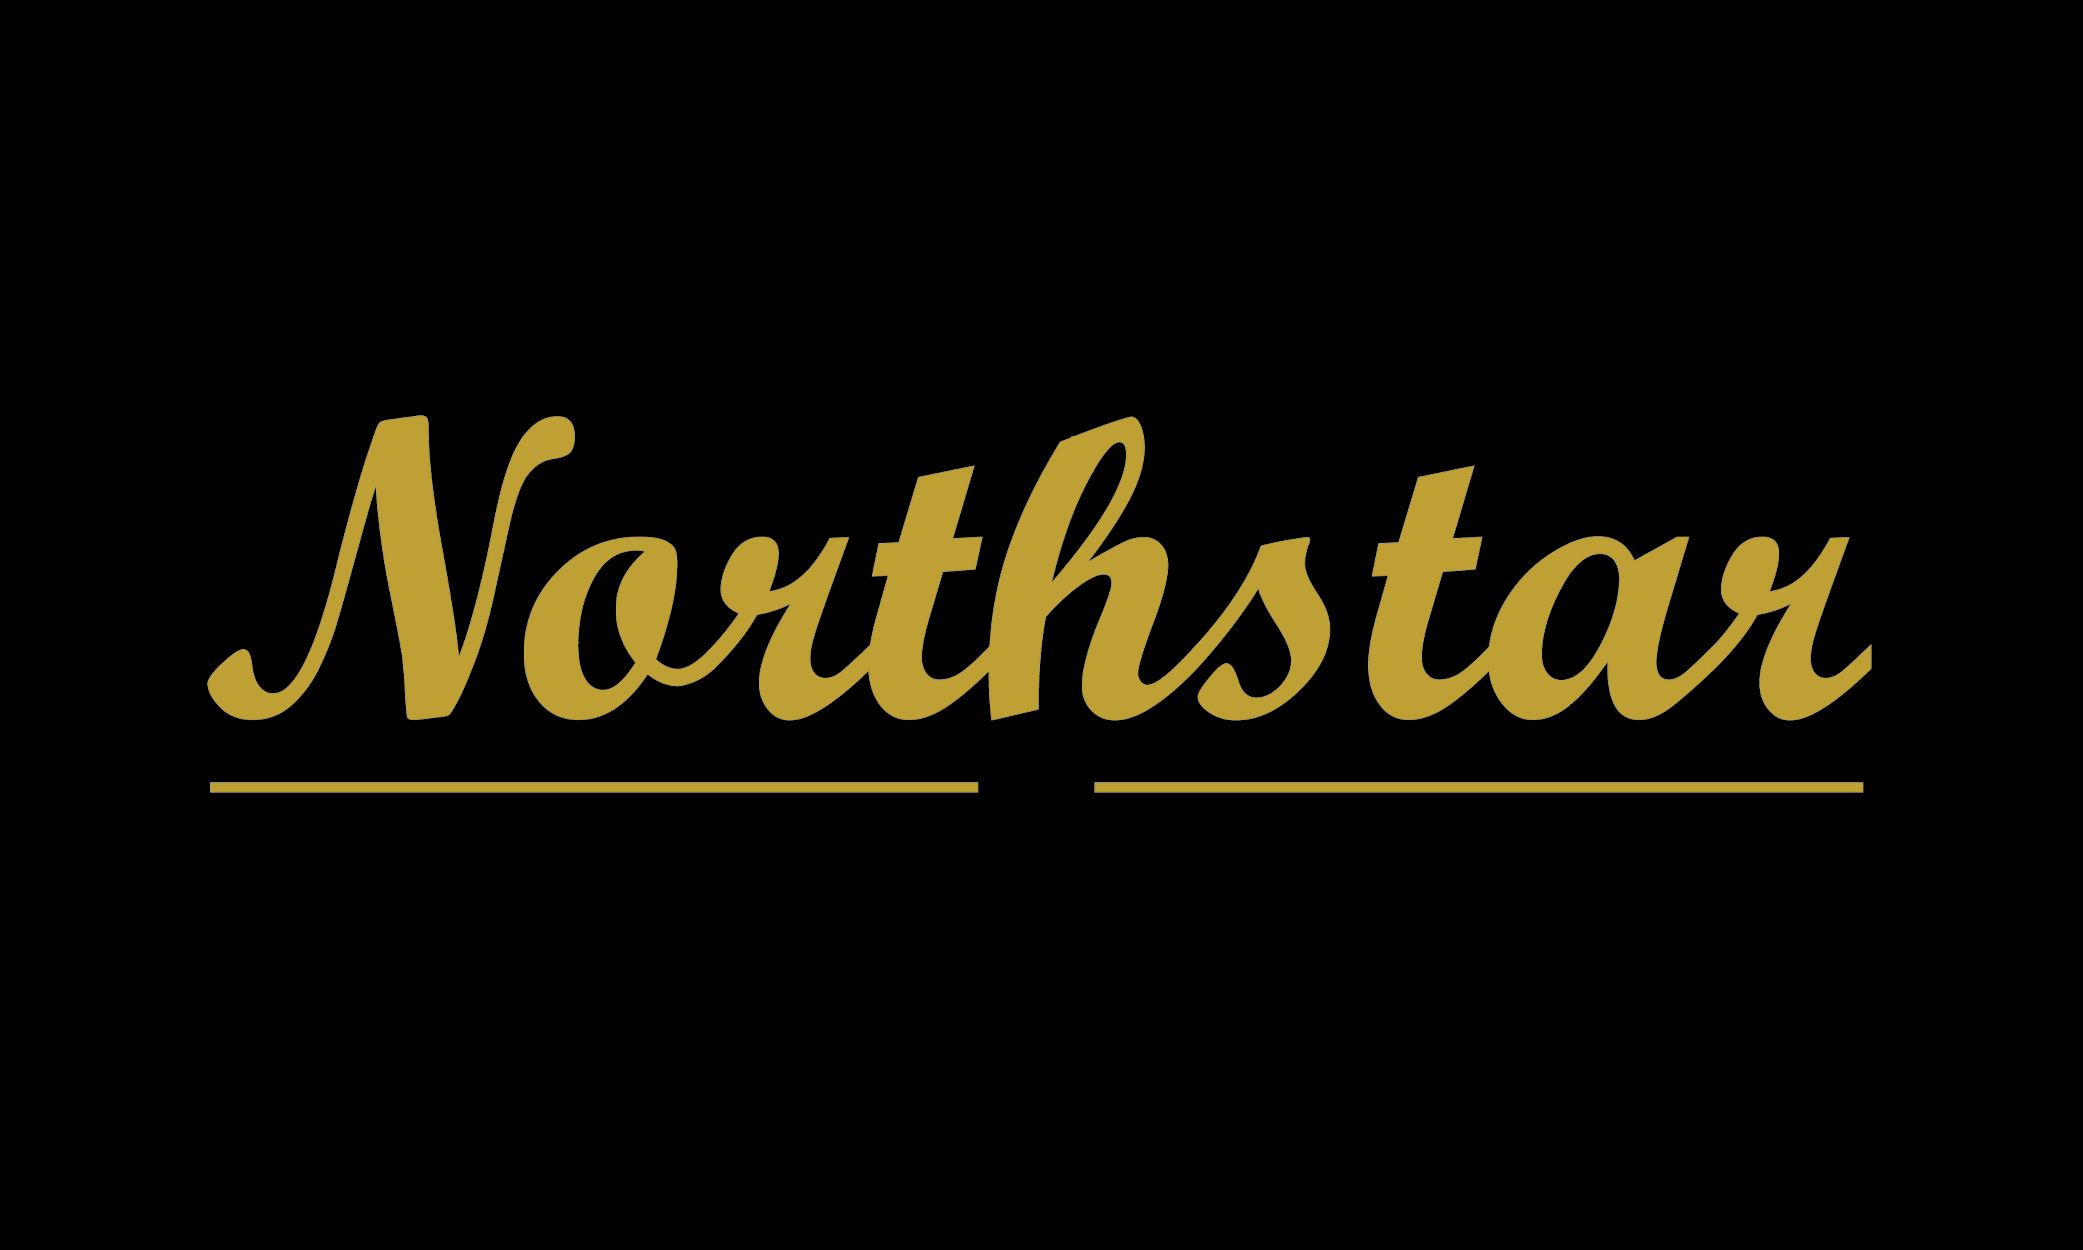 Northstar Electrics